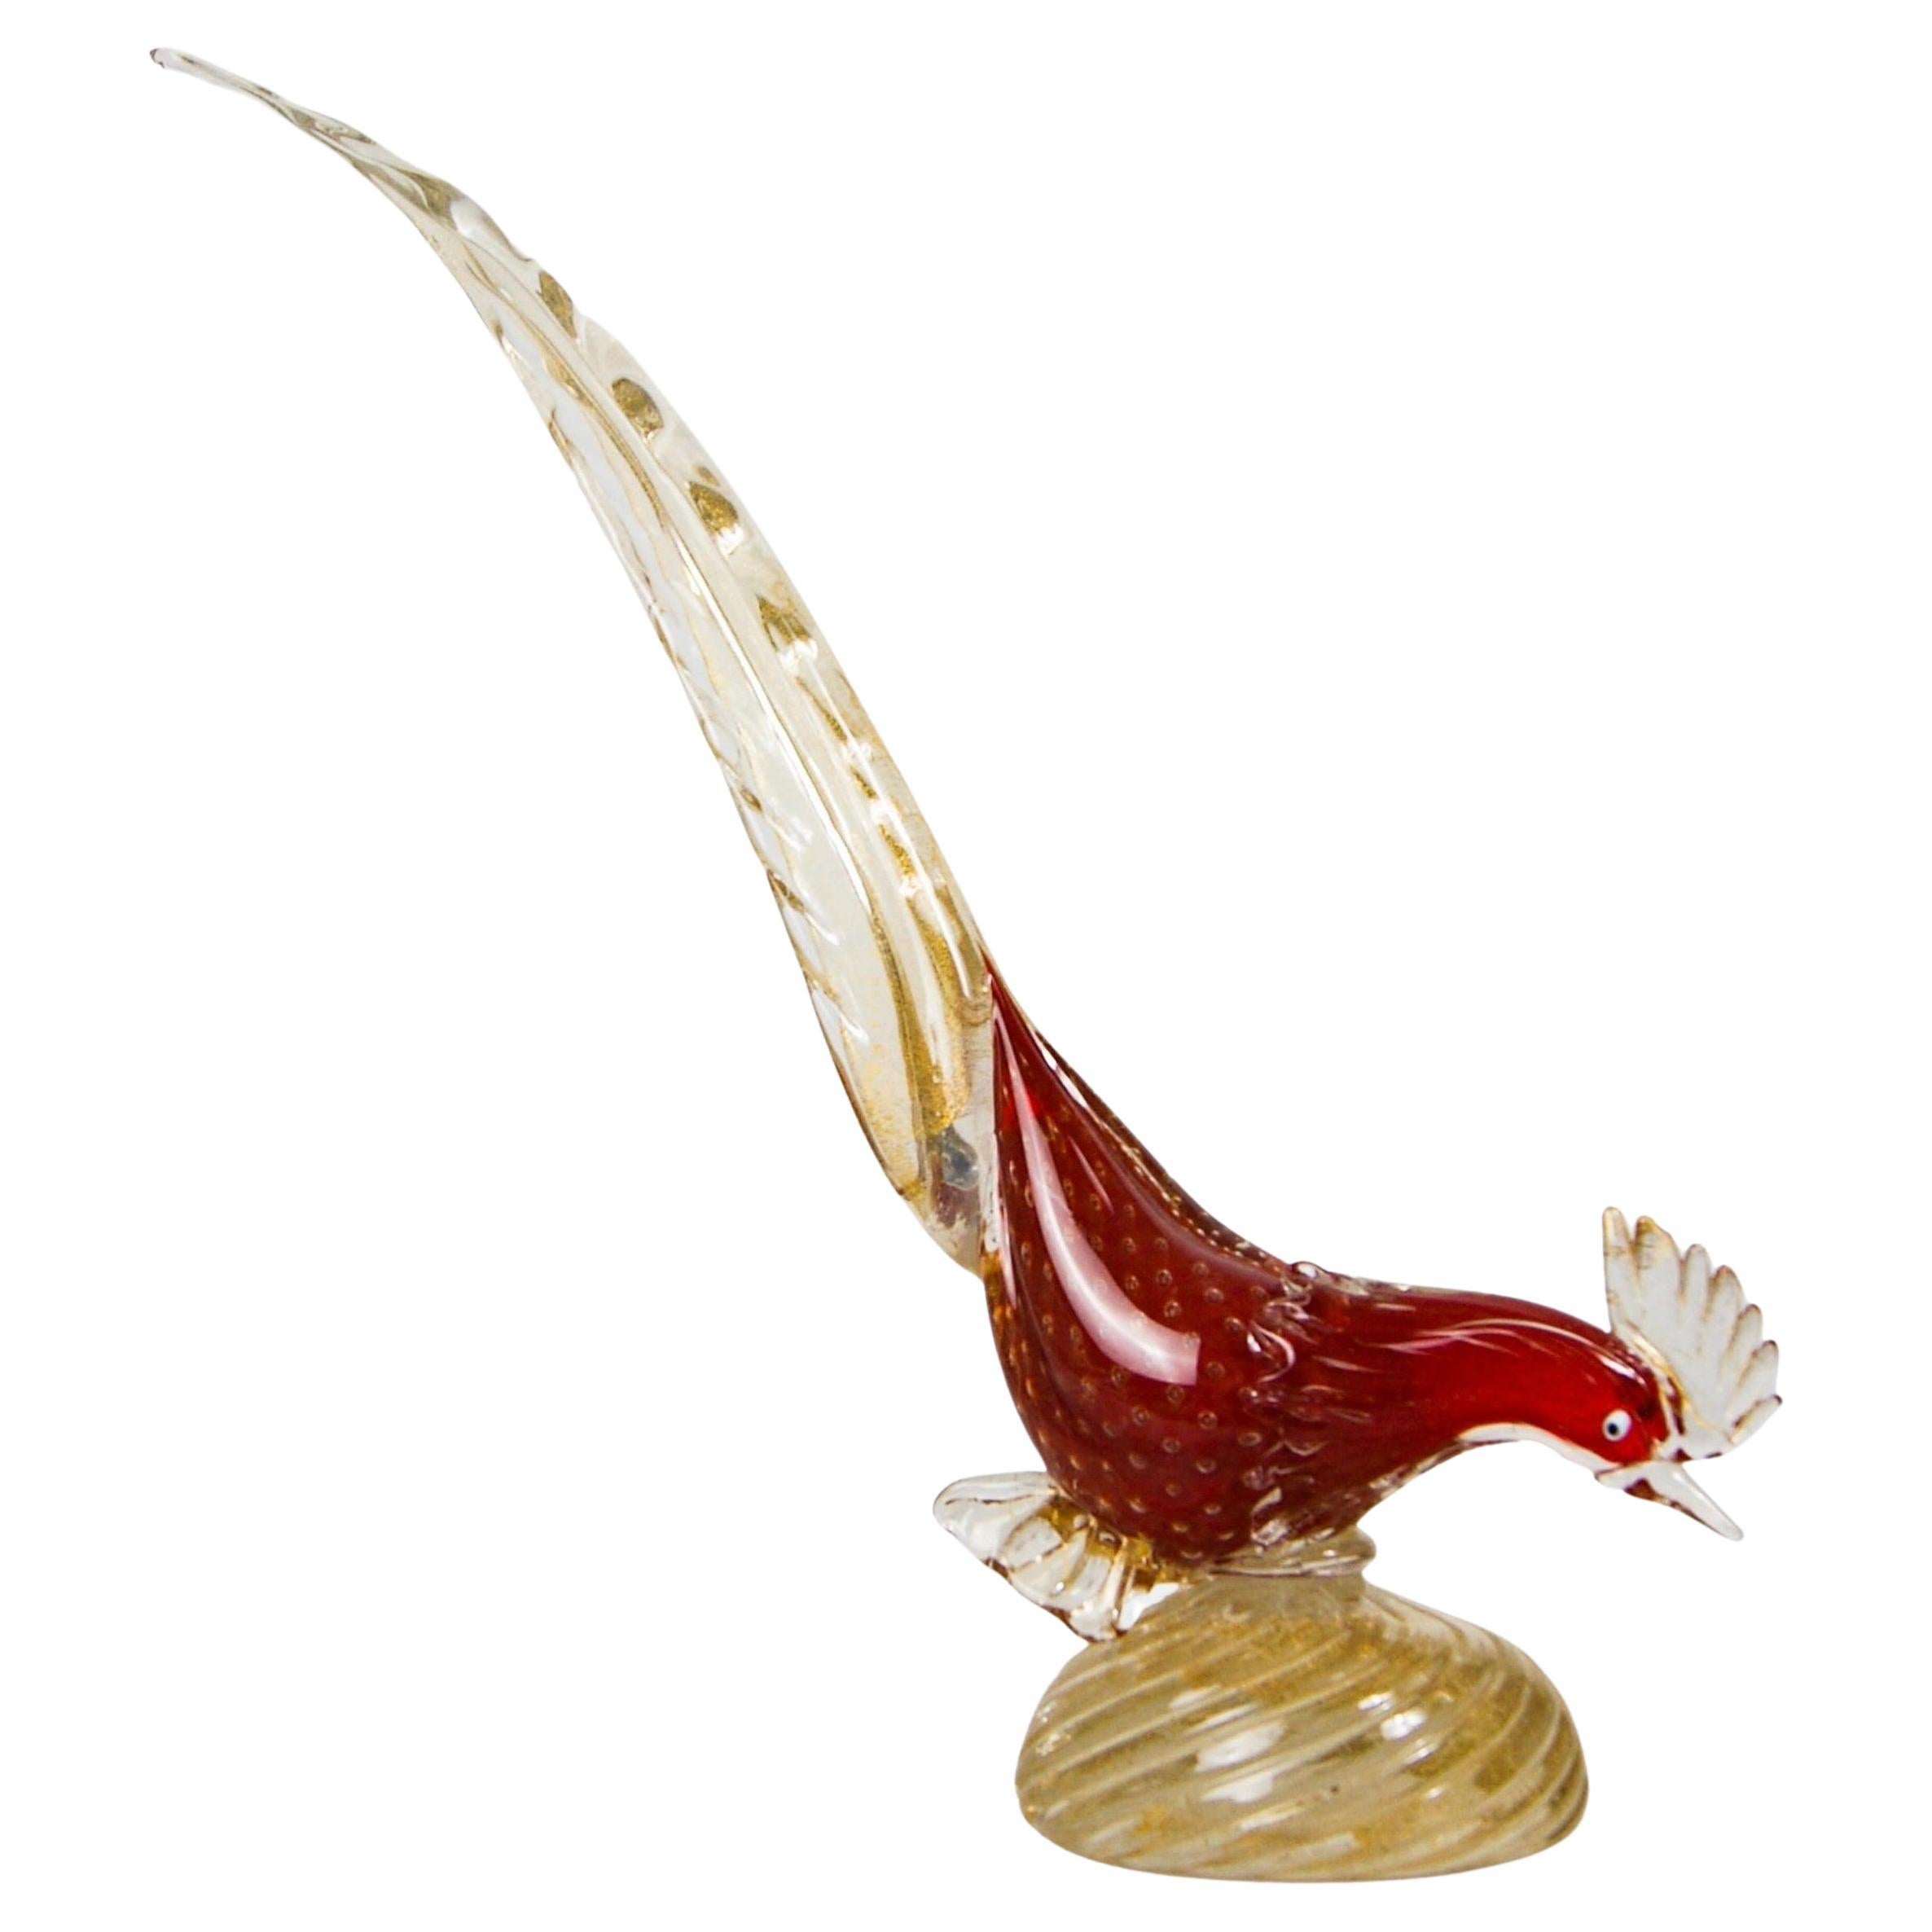 Hollywood Regency 1950s Murano Glass Bird Sculpture Barovier & Toso Attributed